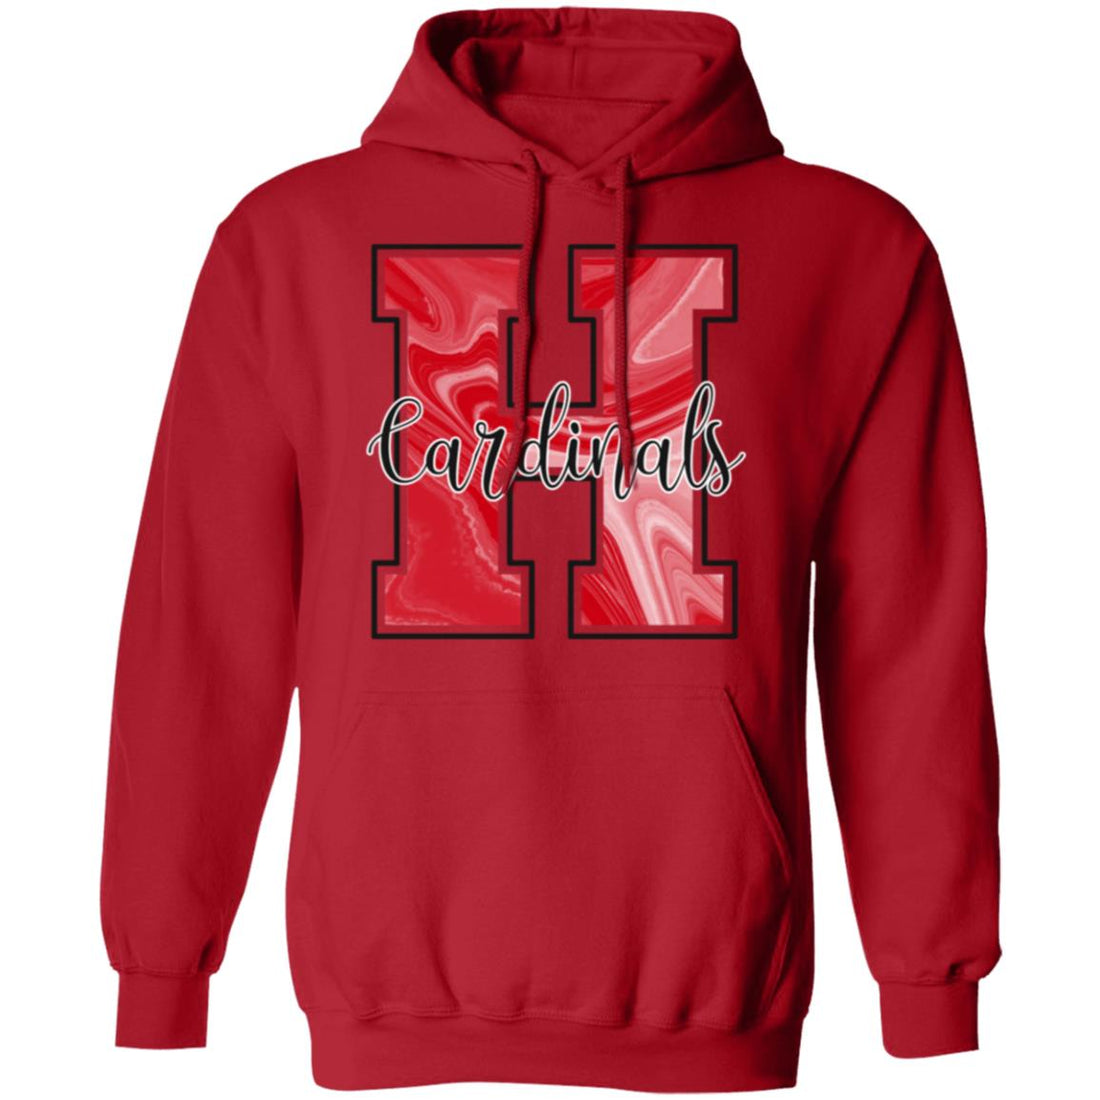 H Cardinals Pullover Hoodie - Sweatshirts - Positively Sassy - H Cardinals Pullover Hoodie